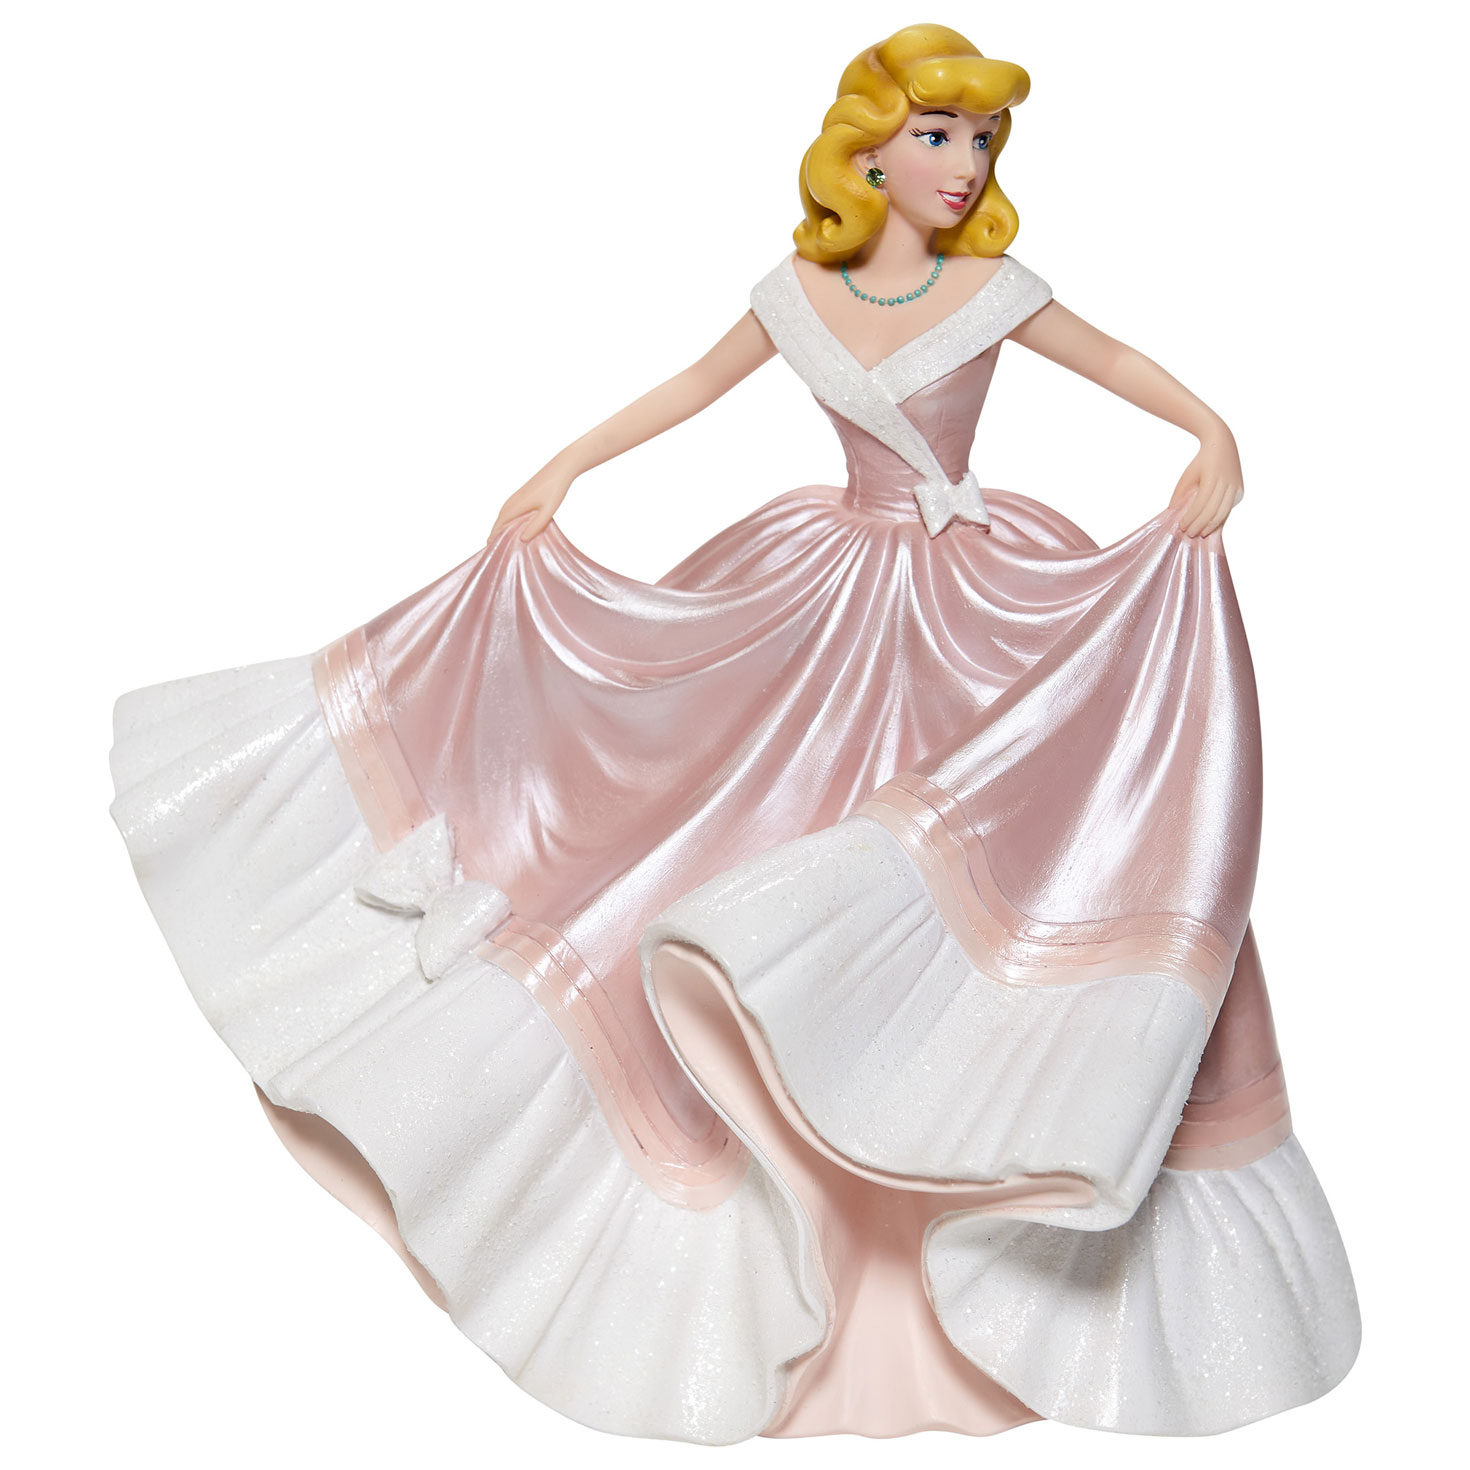 https://www.hallmark.com/on/demandware.static/-/Sites-hallmark-master/default/dw688c5001/images/finished-goods/products/6008704/Cinderella-in-Pink-Dress-Couture-de-Force-Figurine_6008704_01.jpg